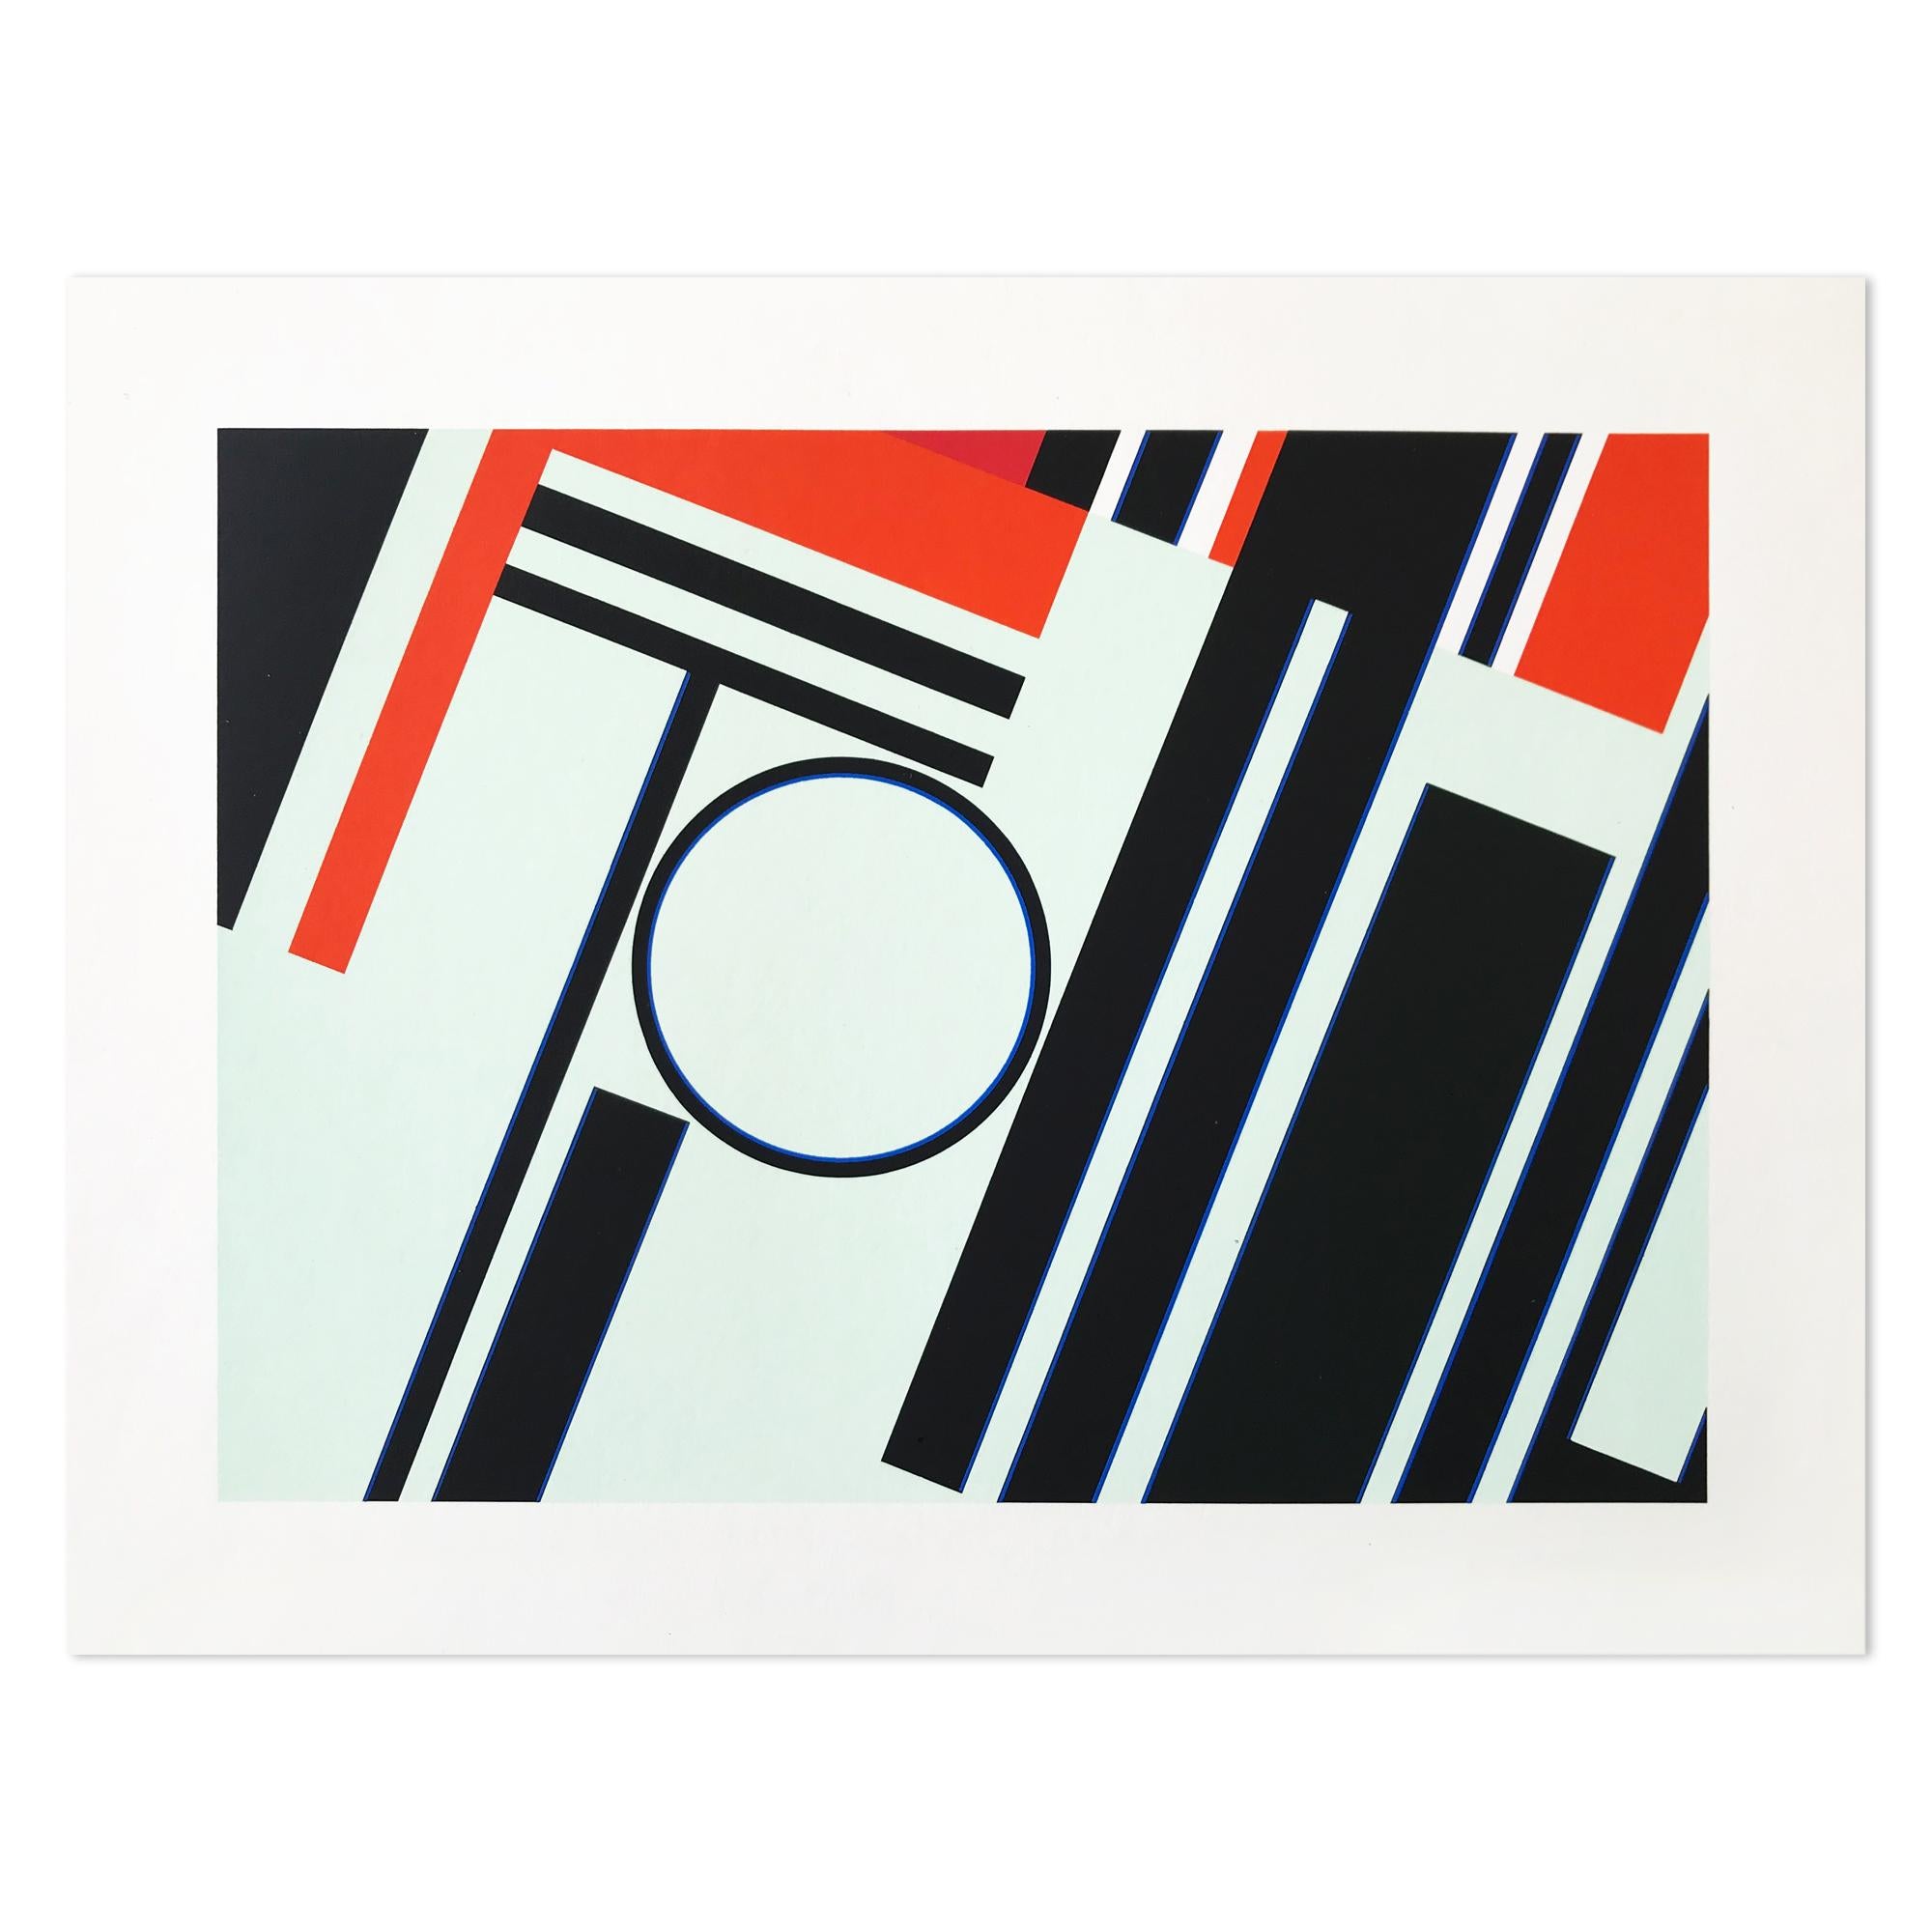 Günther Fruhtrunk Abstract Print - Kreis und Wirkung, Geometric Abstraction, Abstract Art, Constructivism